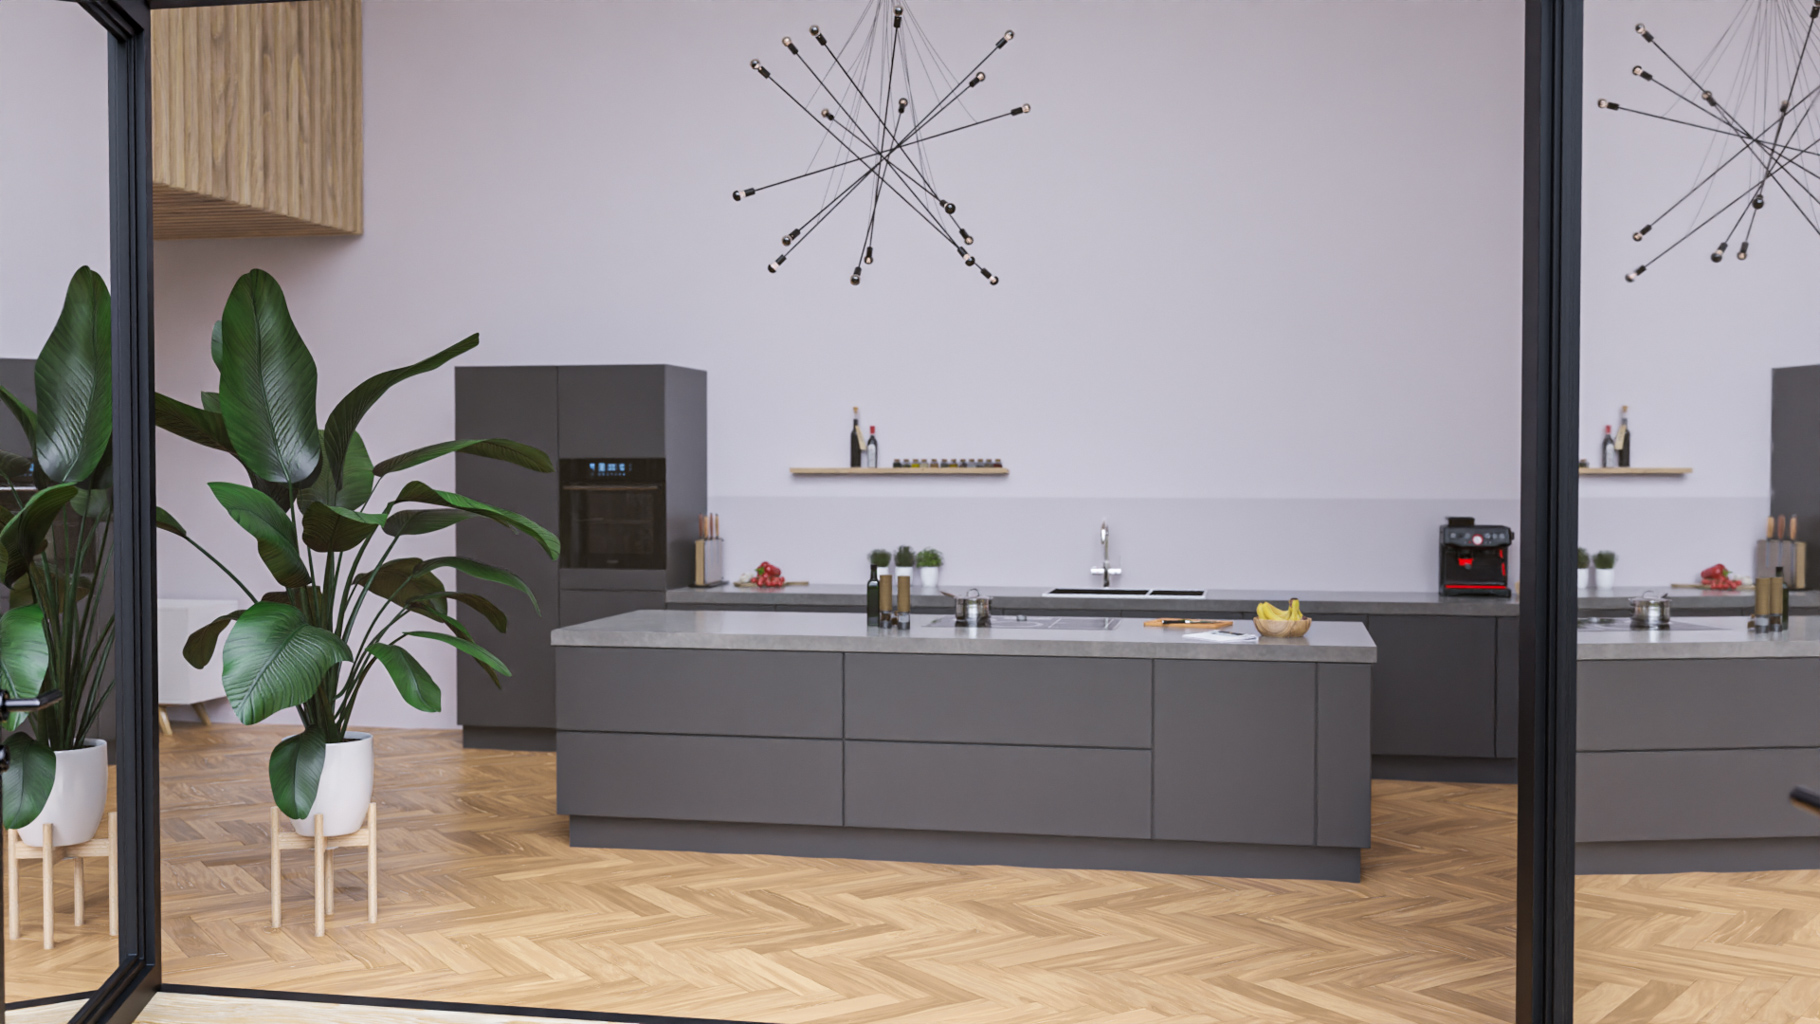 3D visualisatie - Interior render - Kitchen - Keuken